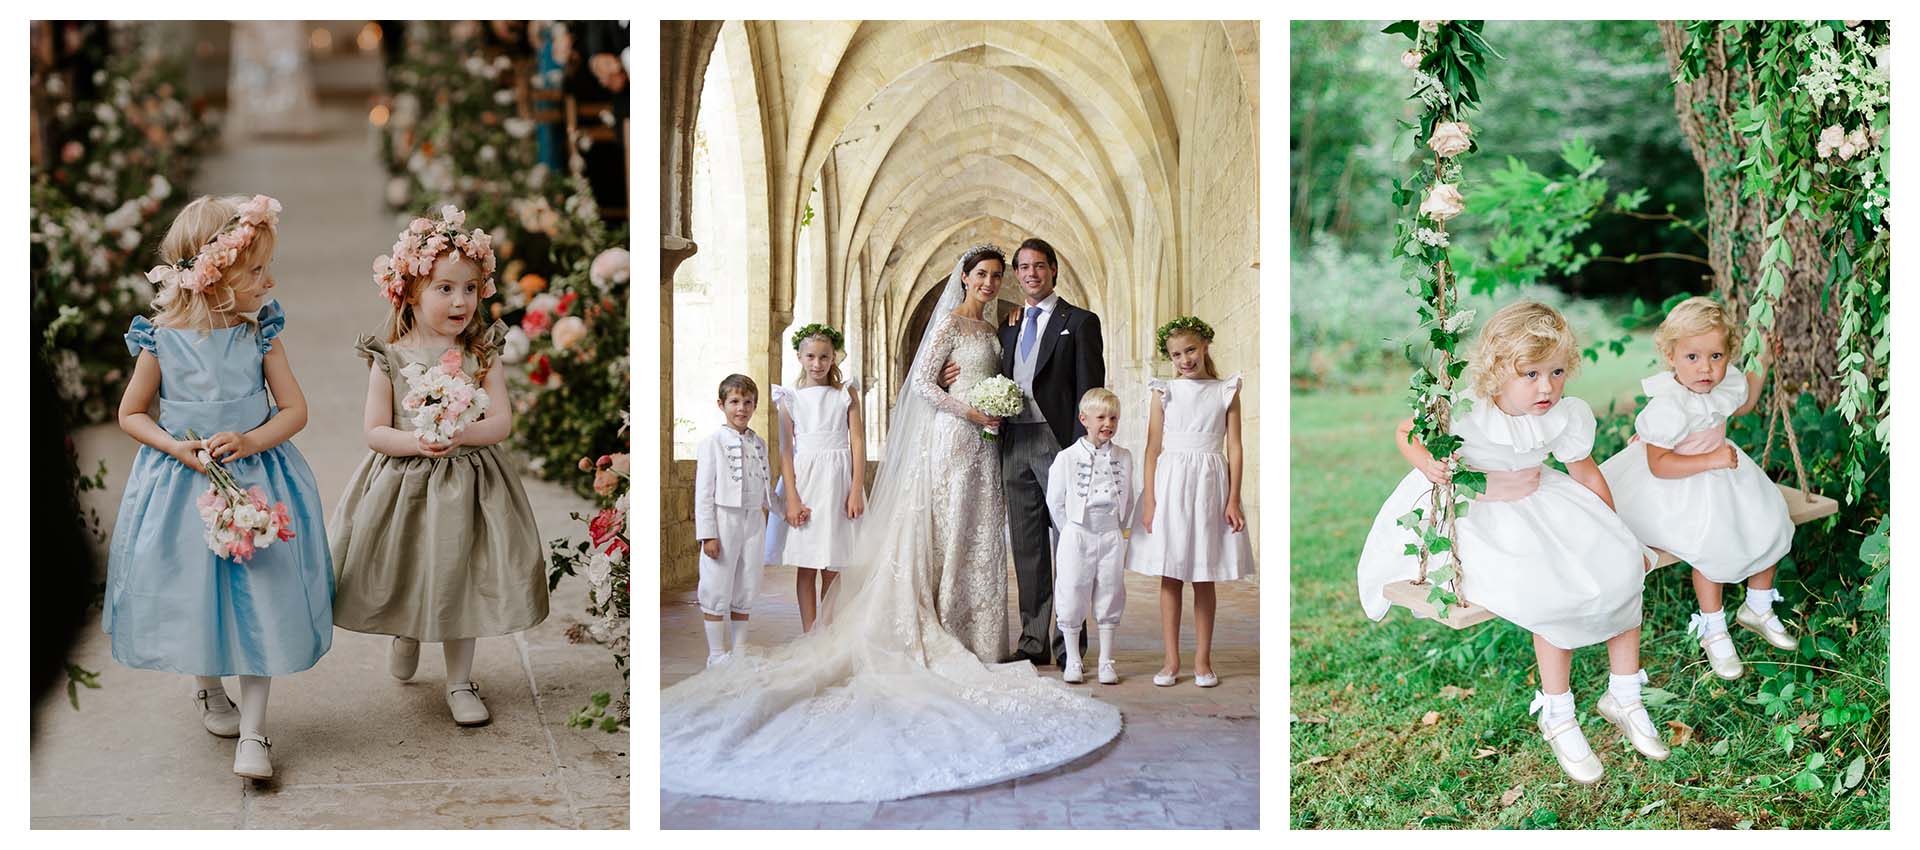 REAL WEDDINGS luxury flower girls and page boys little eglantine - flower girl dresses UK